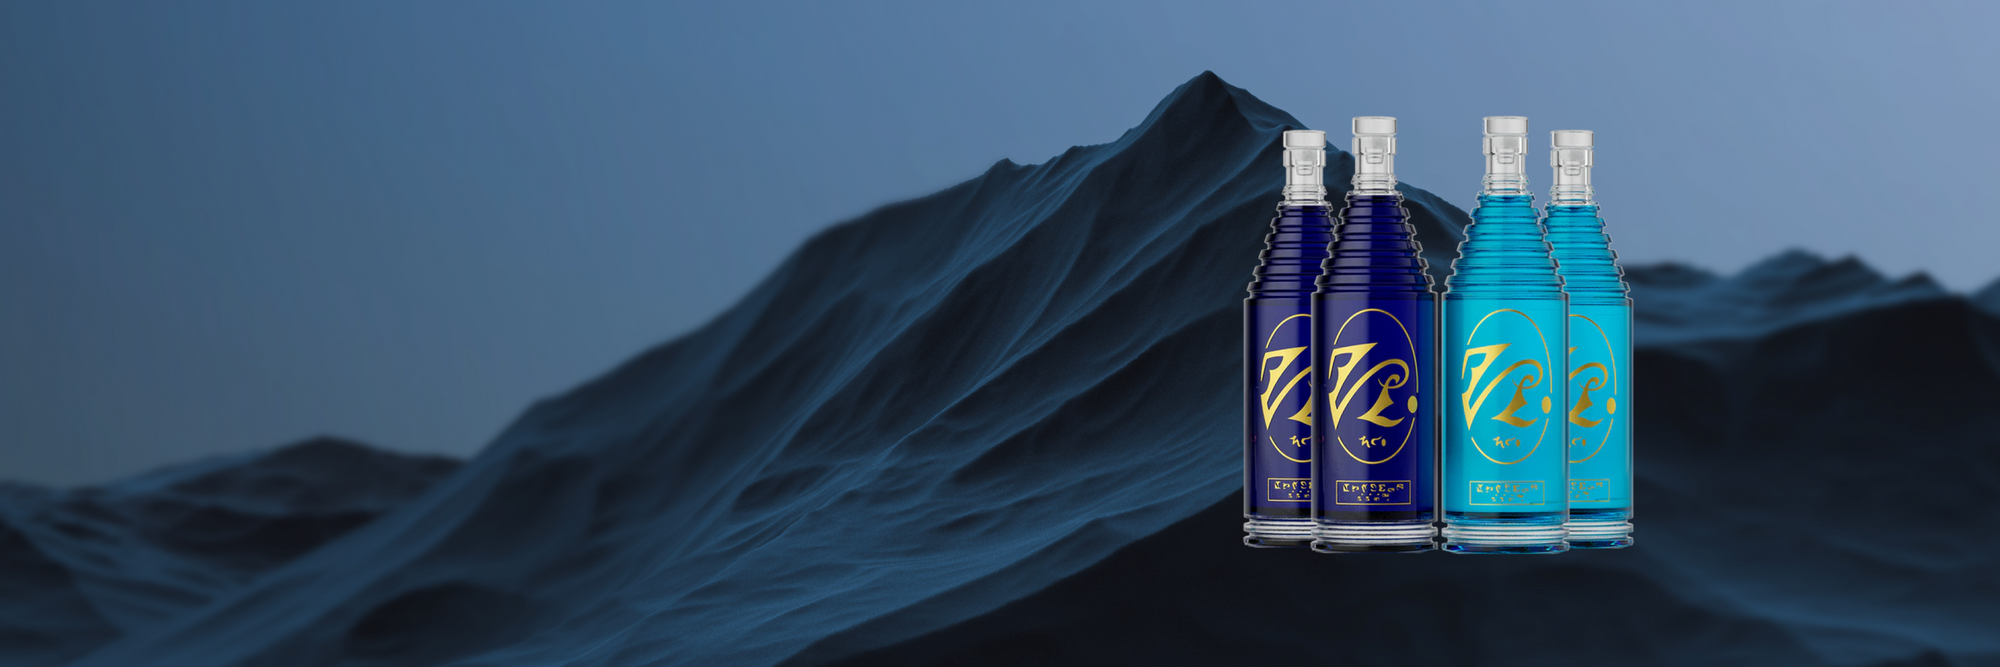 4 spirits bottles against blue mountain background